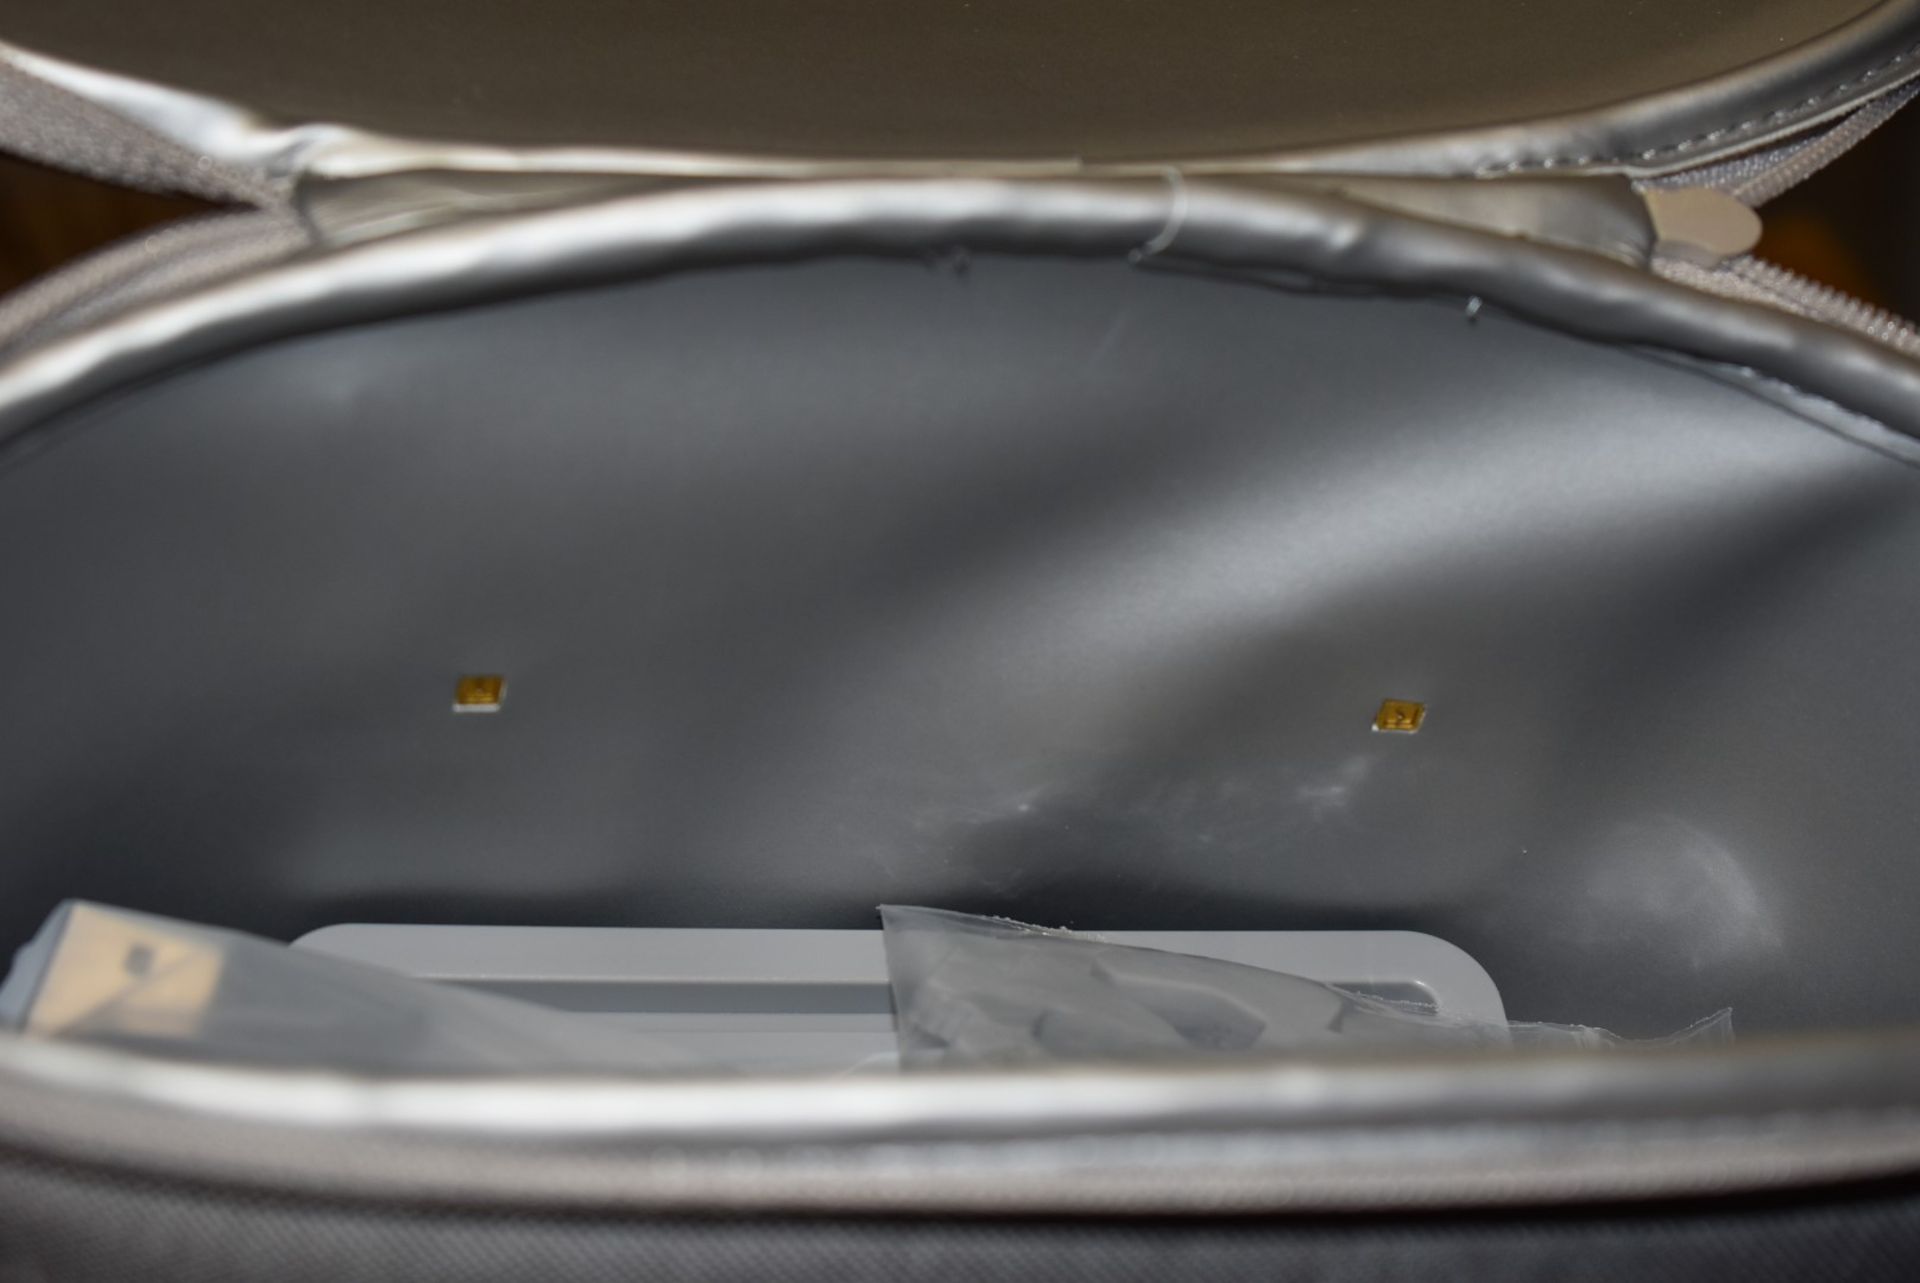 1 x Homedics UV Clean Portable Sanitiser Bag - Kills Upto 99.9% of Bacteria & Viruses in Just 60 - Image 4 of 18